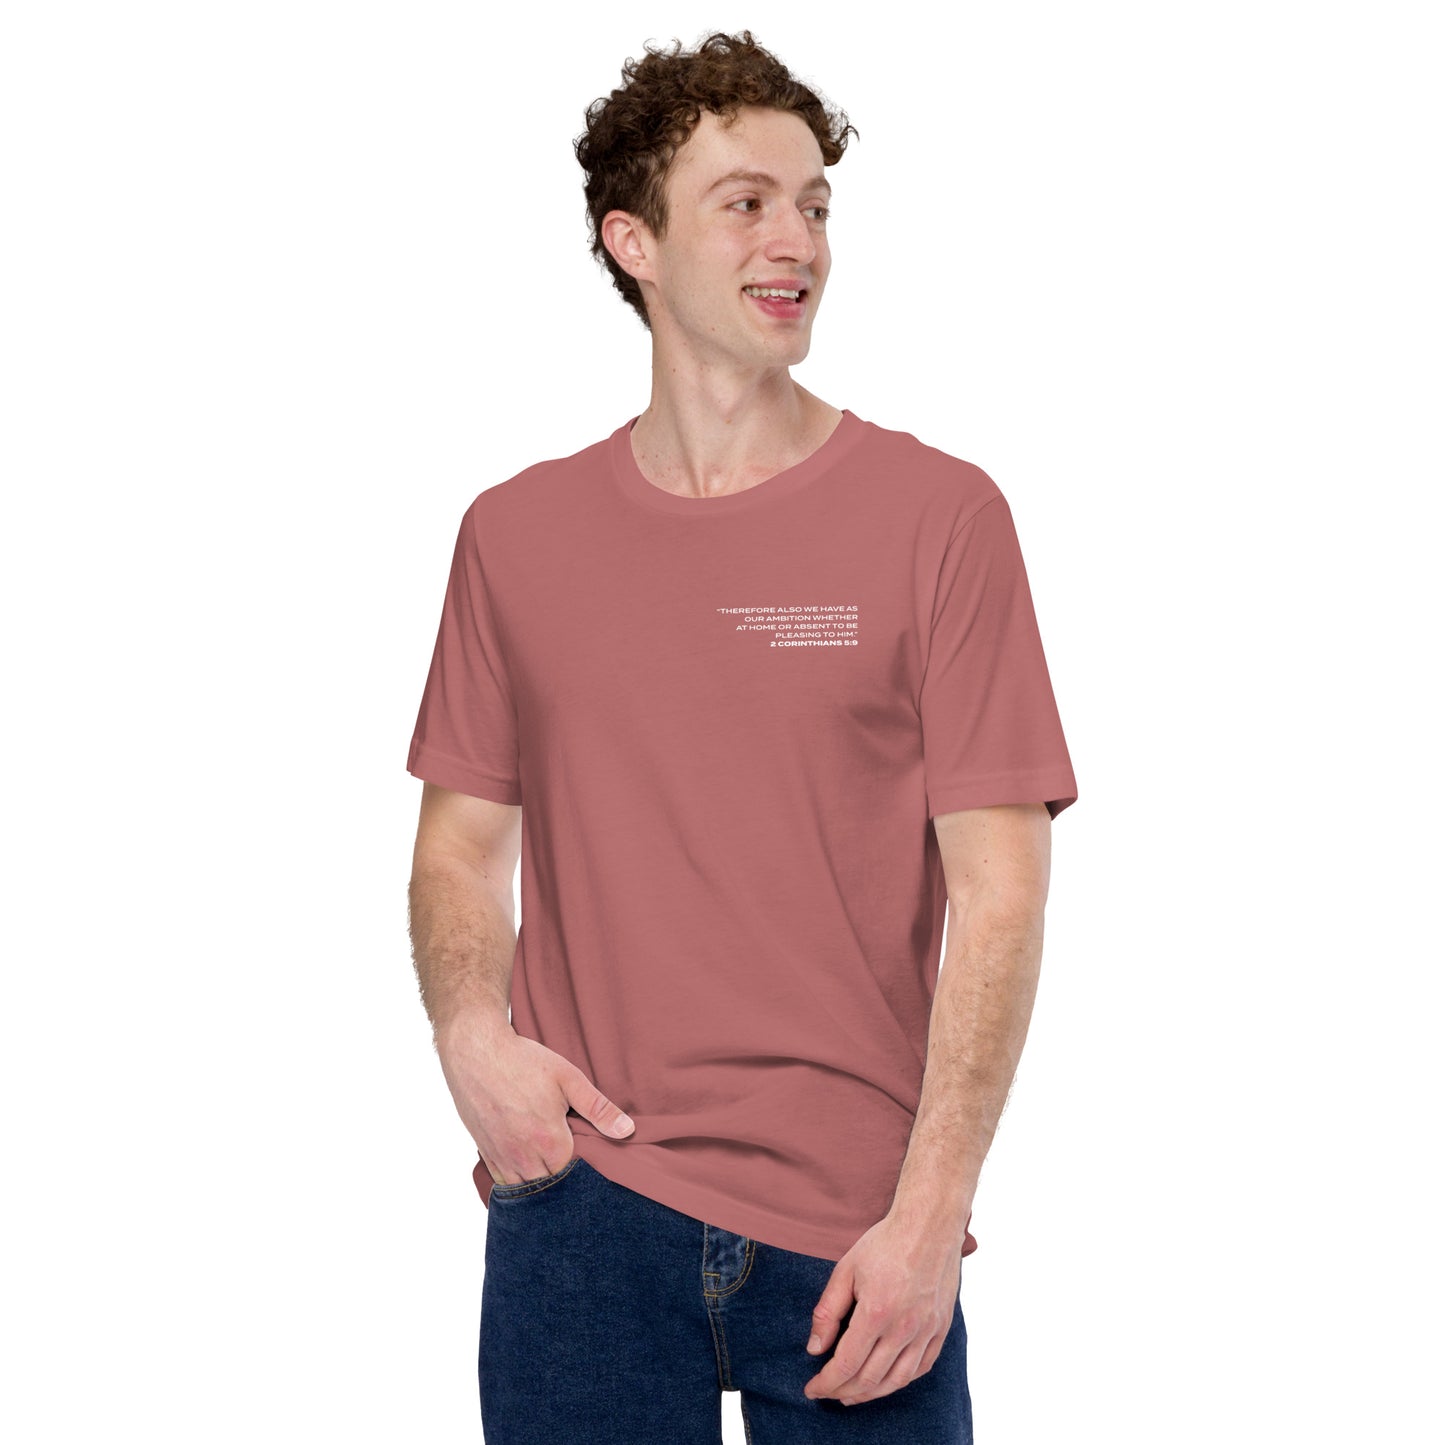 Audience Of One | Unisex t-shirt (mauve)